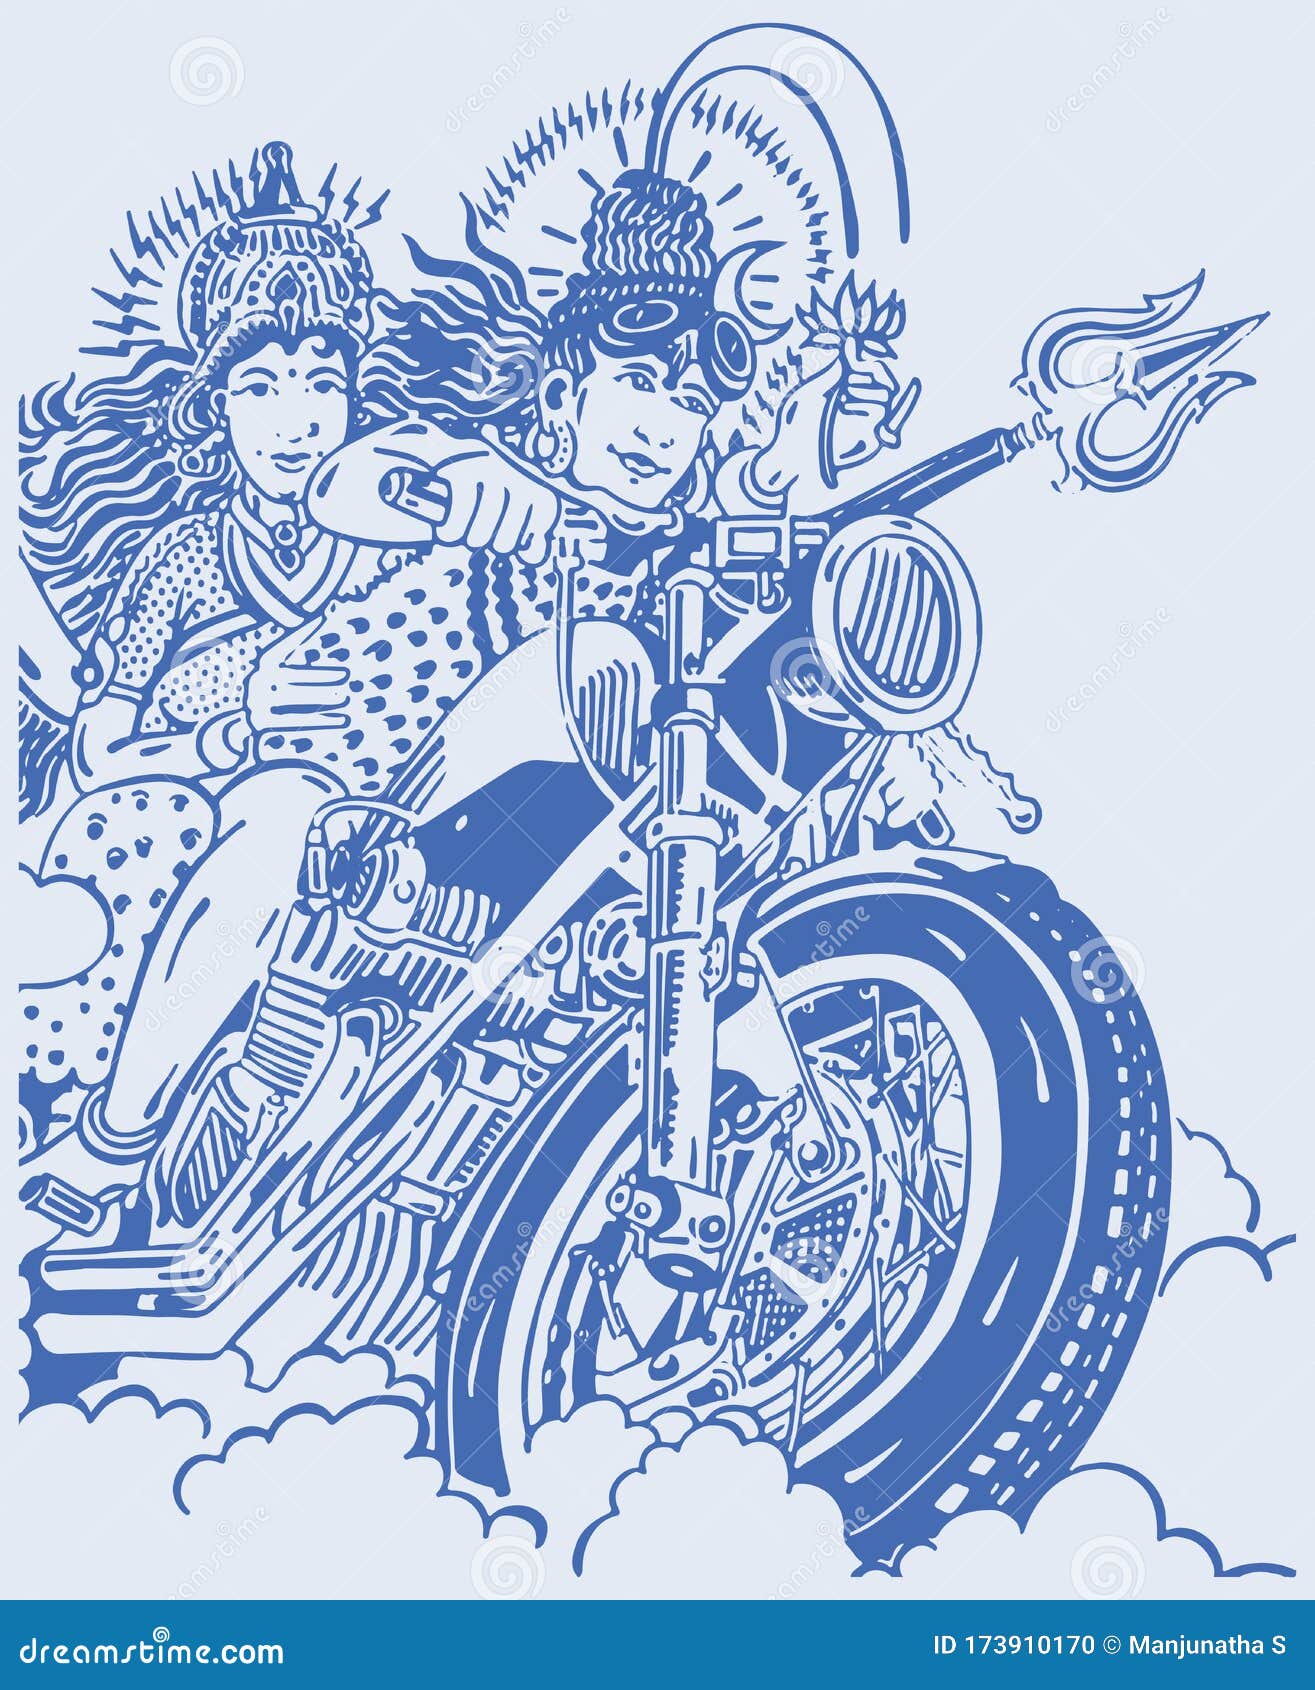 Art on Sketchbook  by Megha Chhatbar Graphite Pencil Sketch Lord Shiva